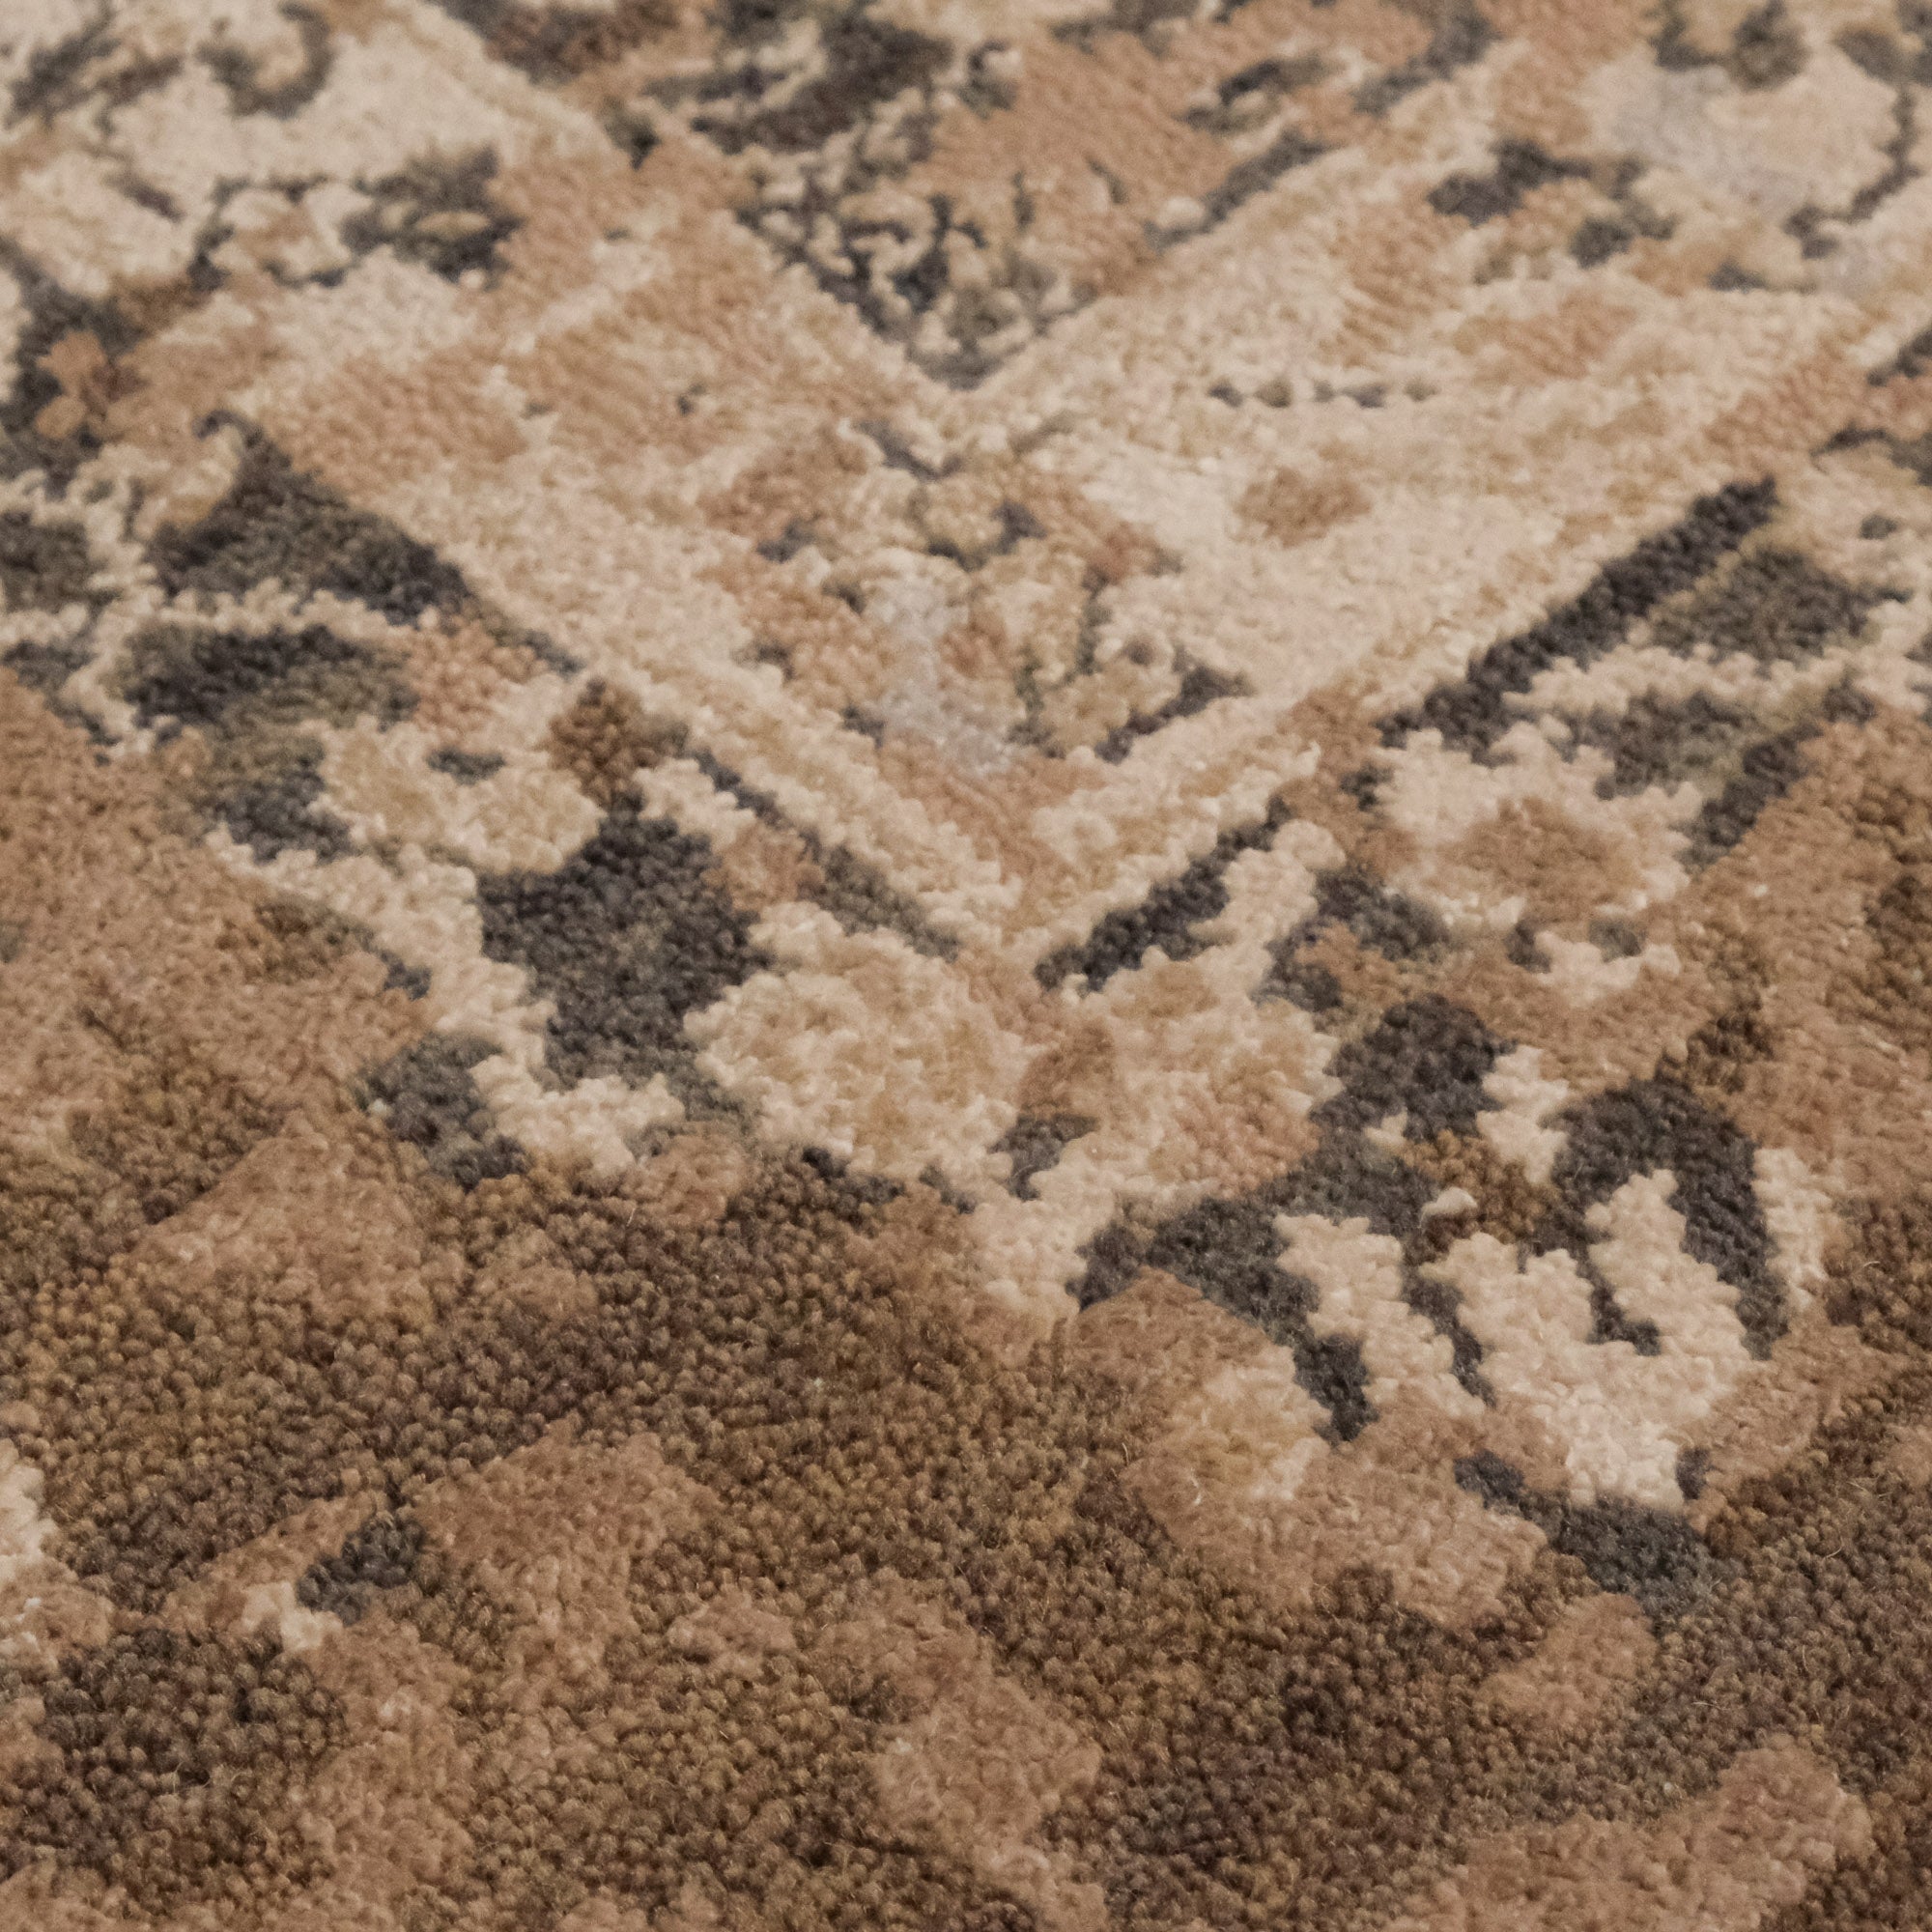 Jaipur Series Hand-Woven Vintage Patterned Brown Carpet